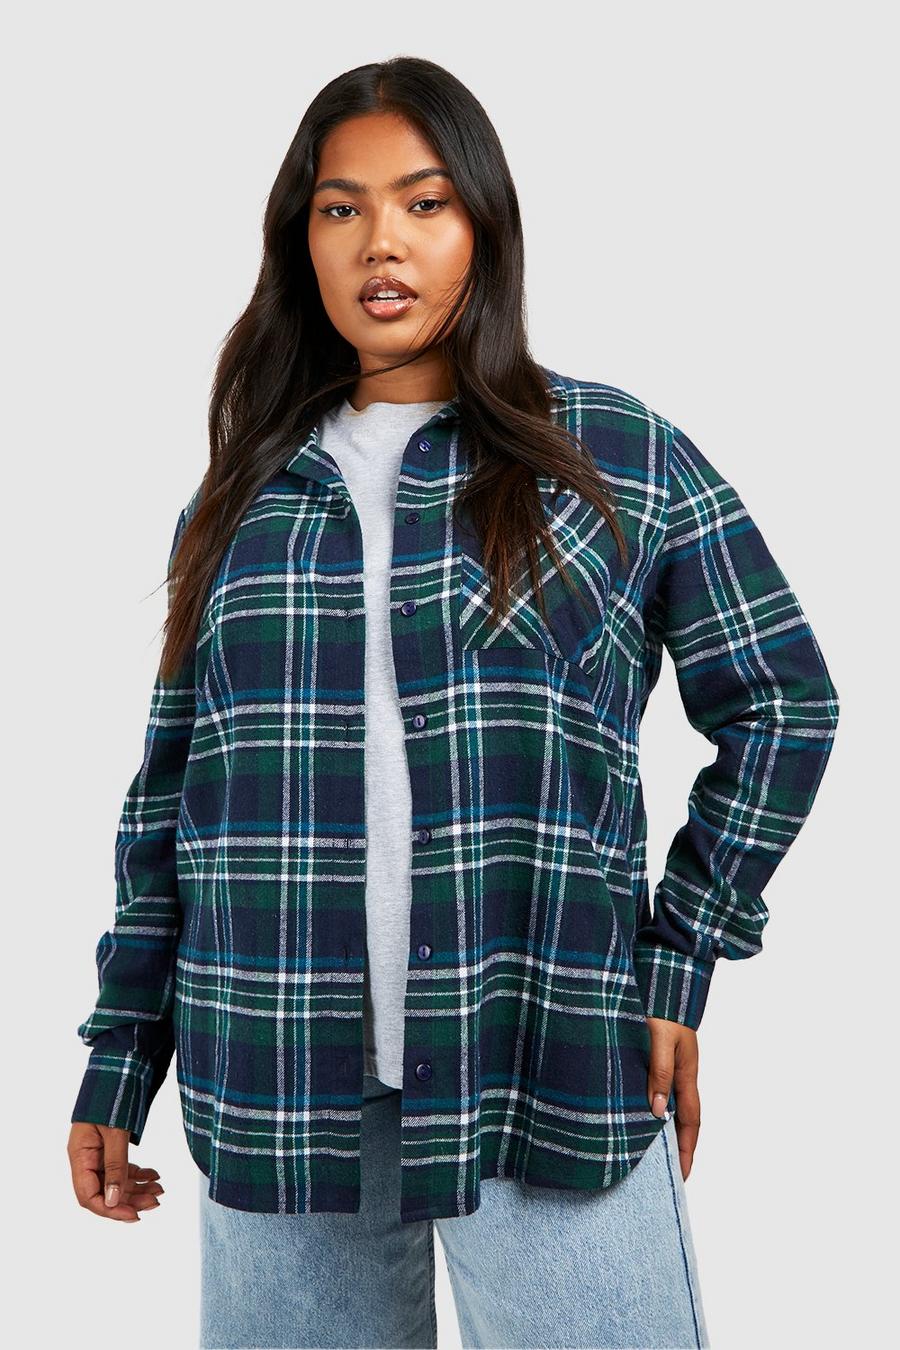 Sunisery Womens Flannel Plaid Shirts Long Sleeve Button Down Oversized  Shirt Blouse Tops Boyfriend Shirt Y2k Jacket Coats 